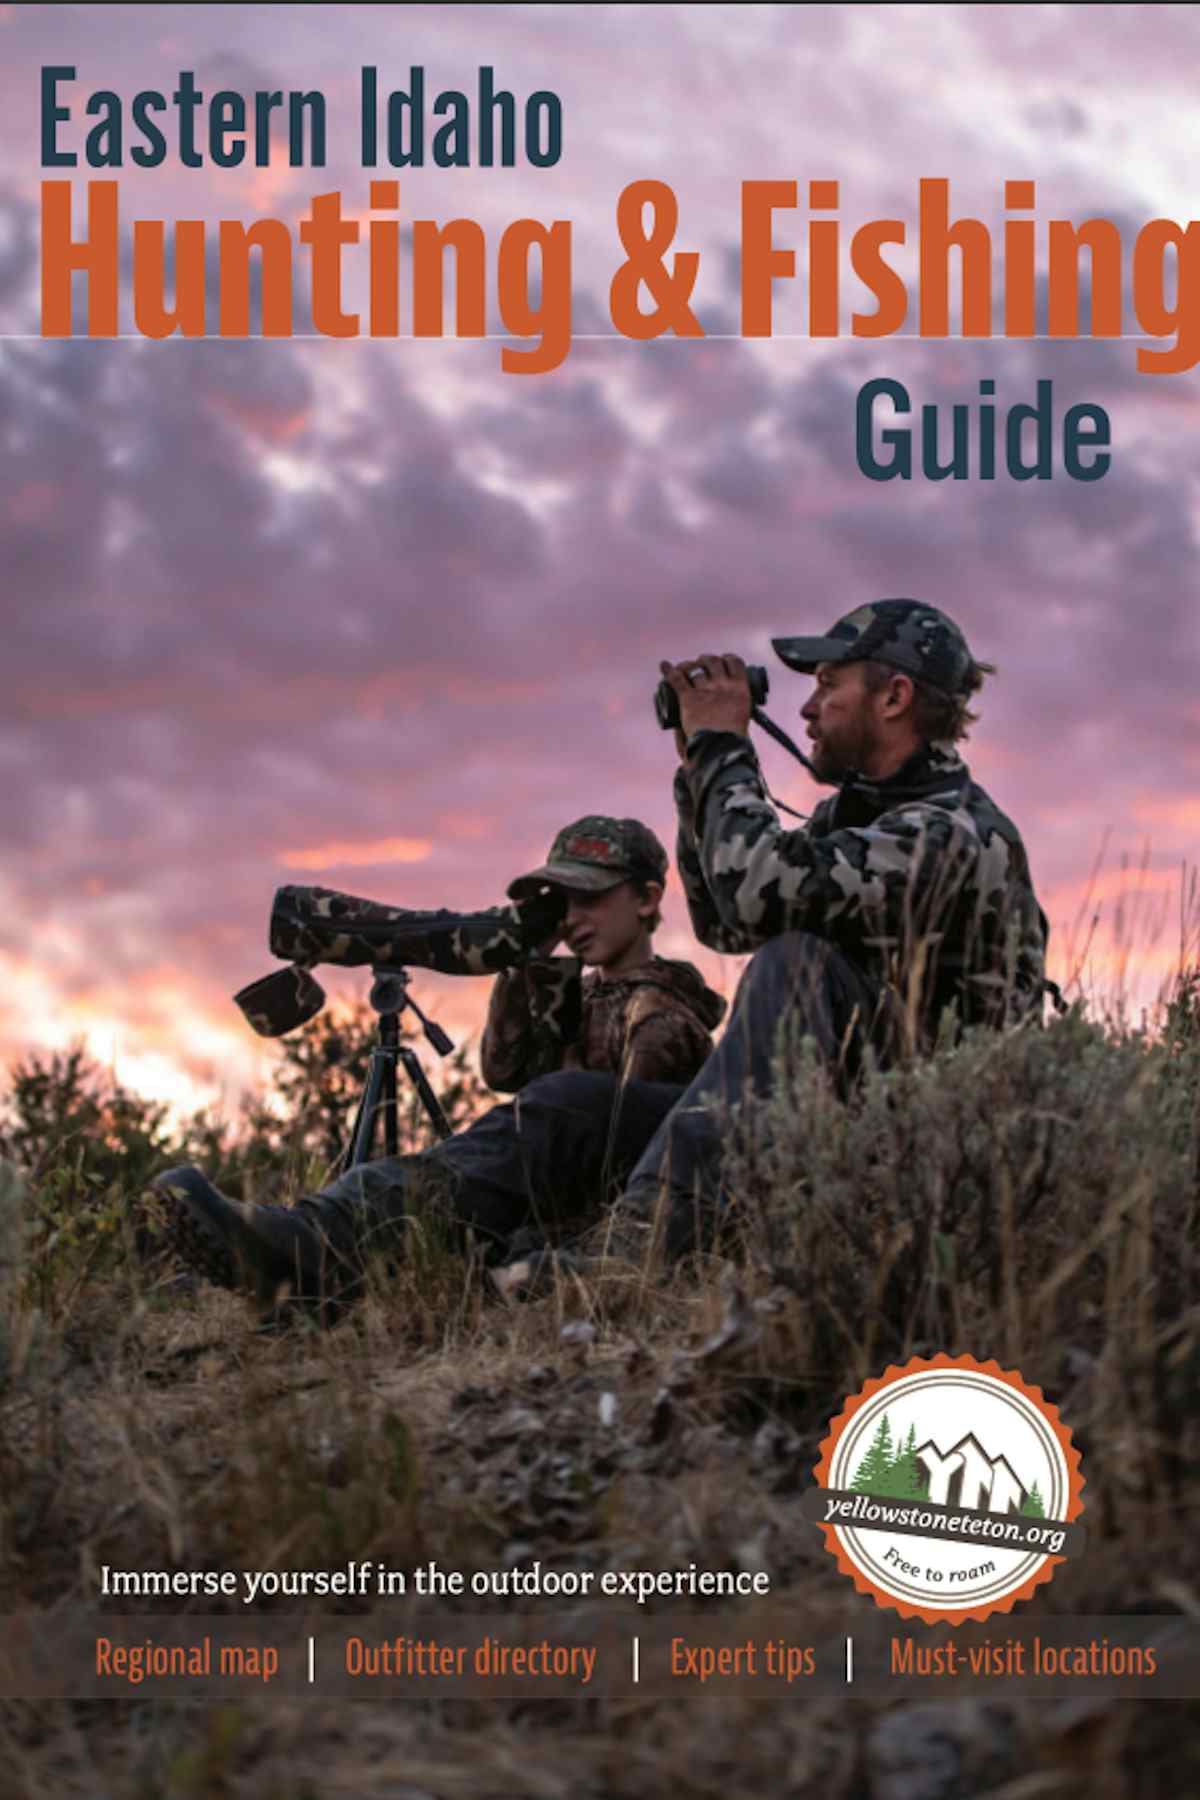 The Eastern Idaho Hunting  Fishing Guide for Yellowstone Teton Territory.